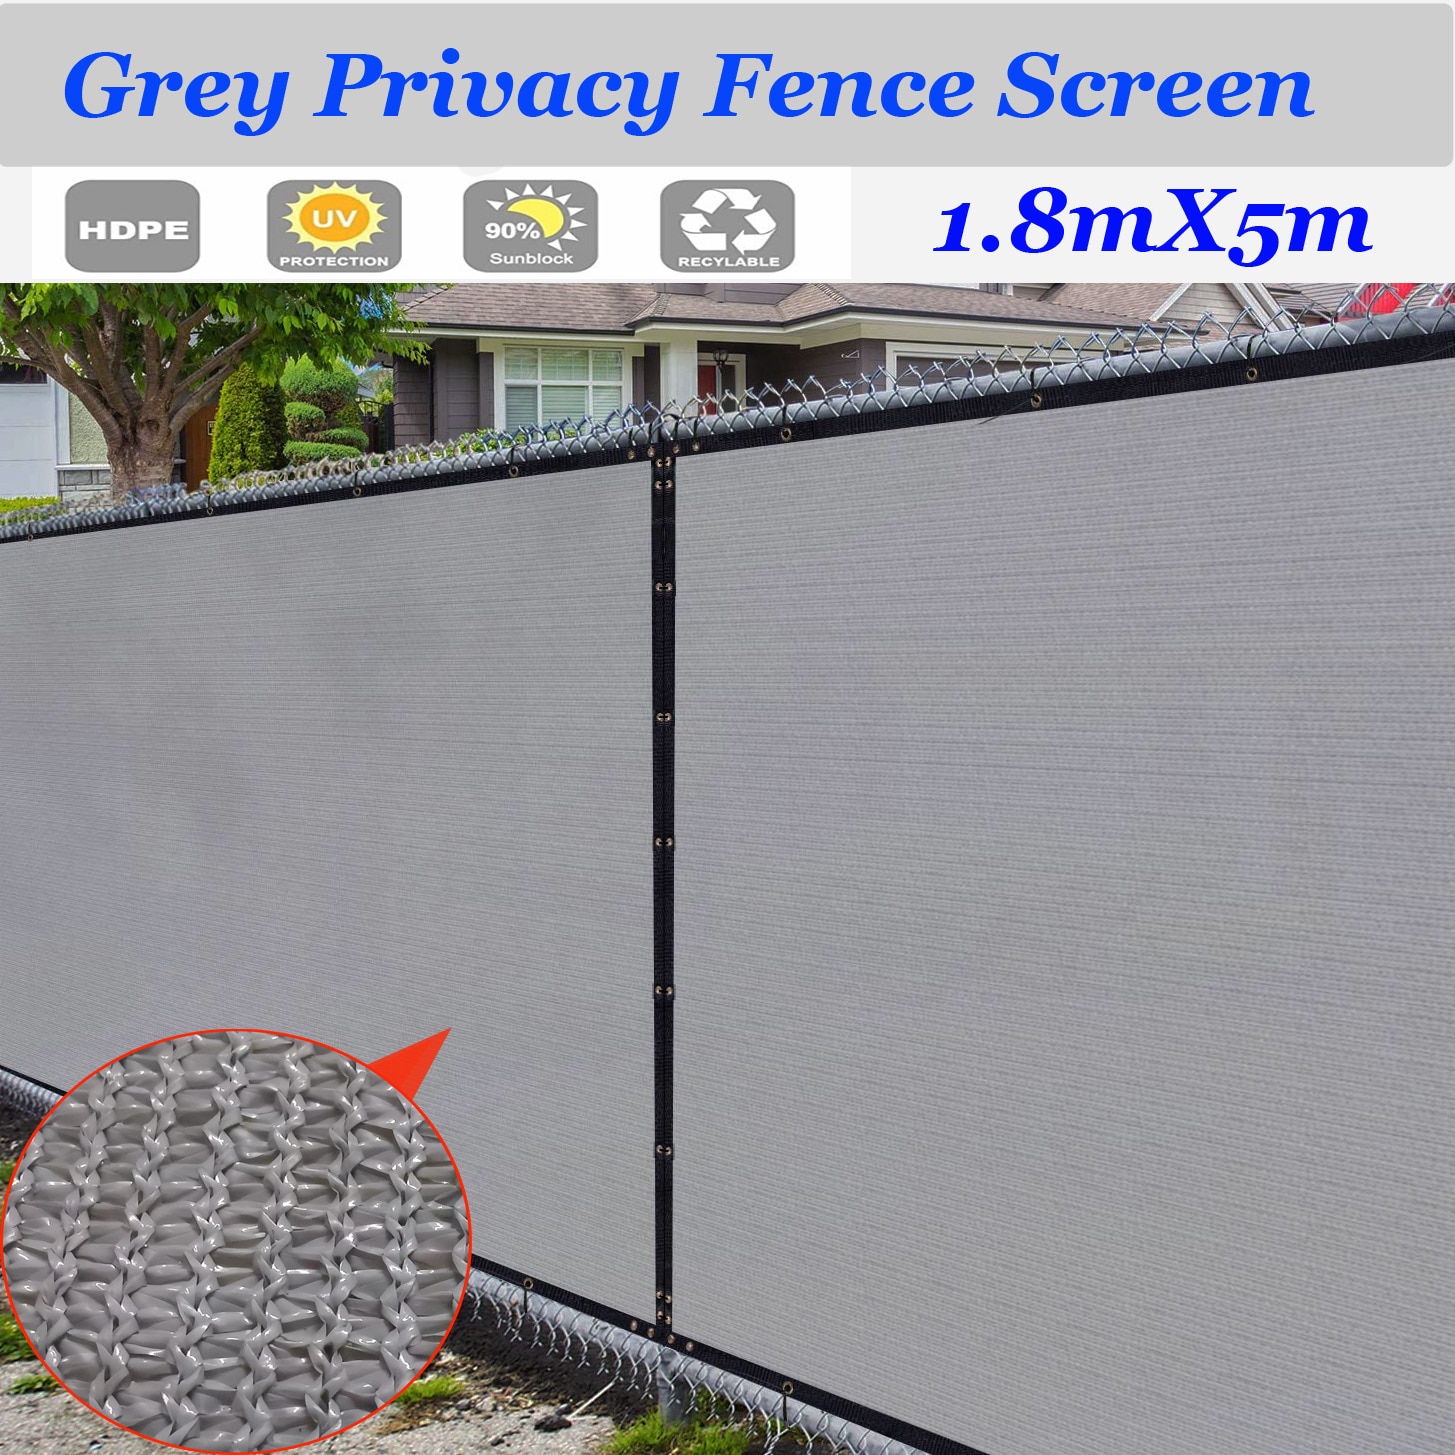 Privacy Screen Fence Heavy Duty Fencing Mesh Shade Net Cover for Wall Garden Yard Backyard Pool-Grey